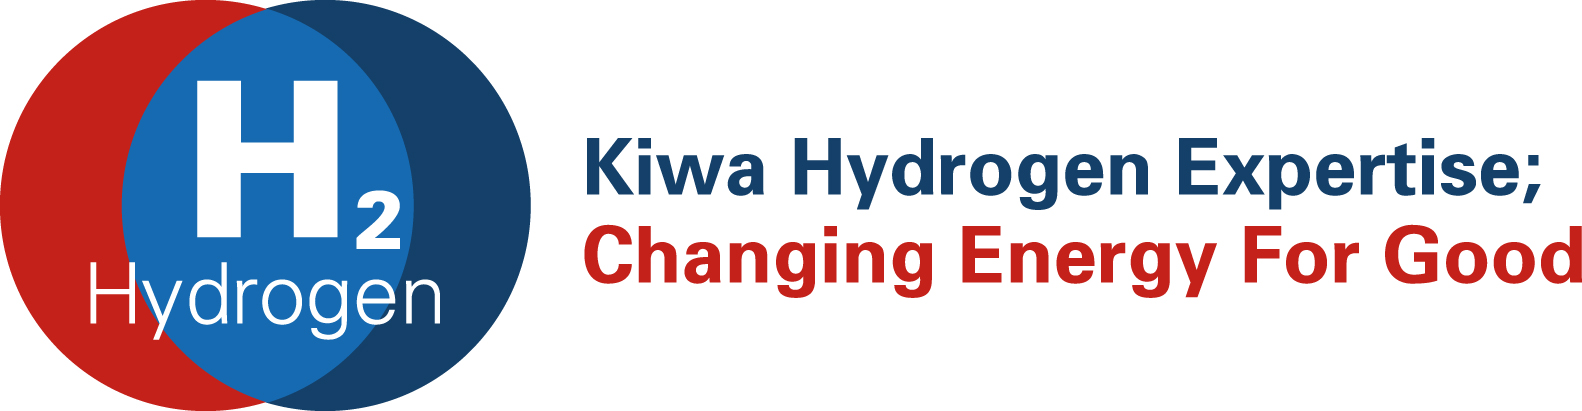 Kiwa Hydrogen Expertise